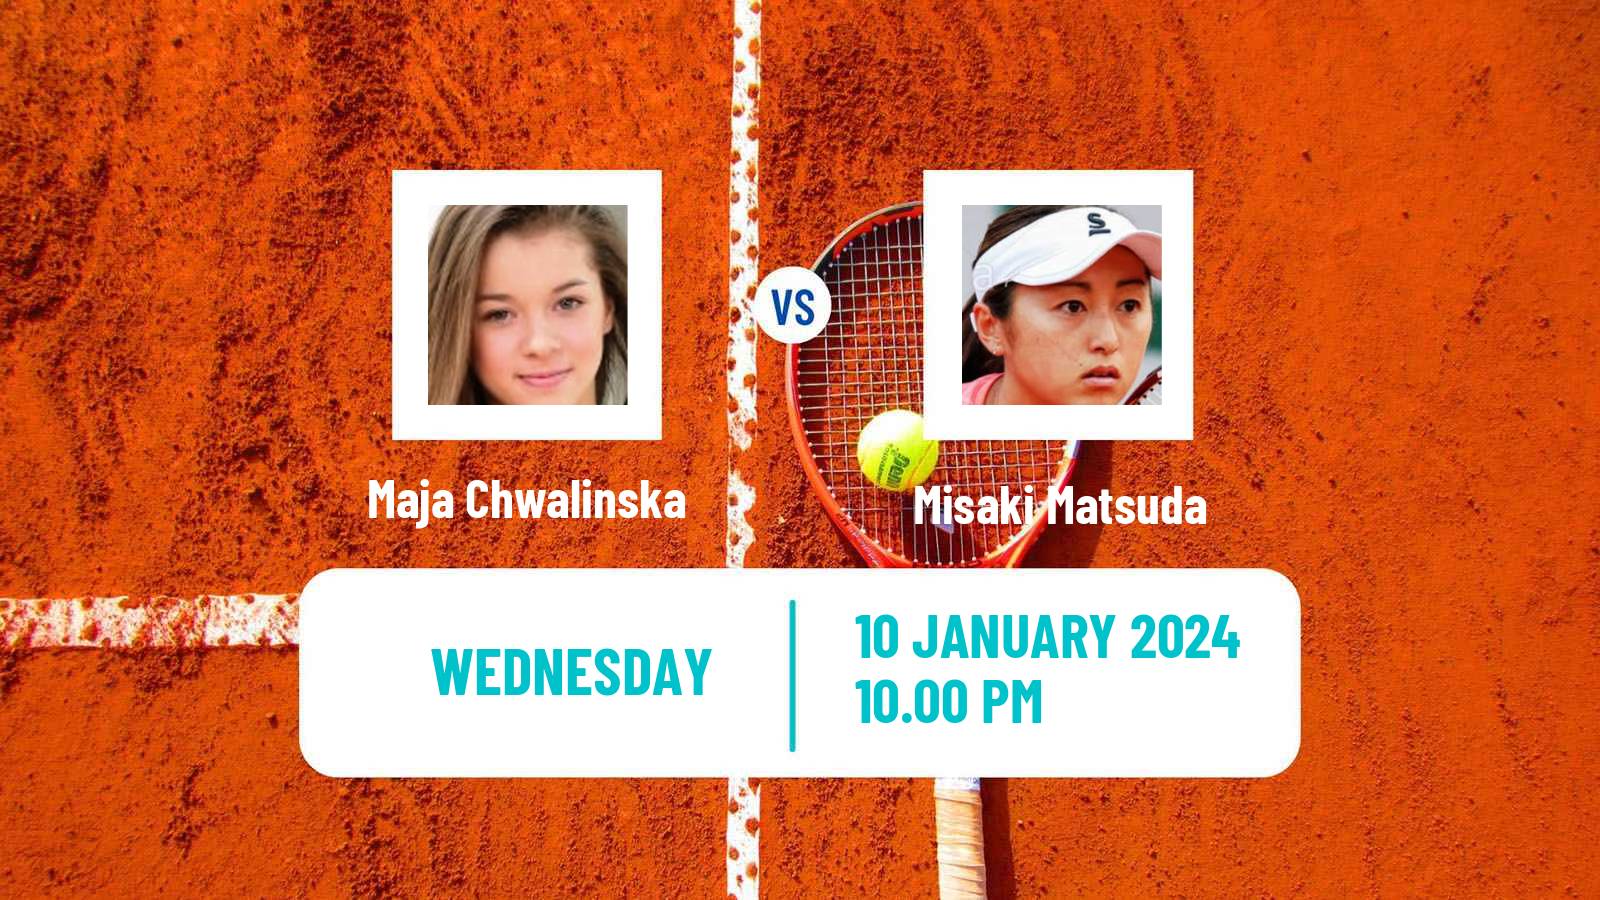 Tennis ITF W50 Nonthaburi 2 Women Maja Chwalinska - Misaki Matsuda